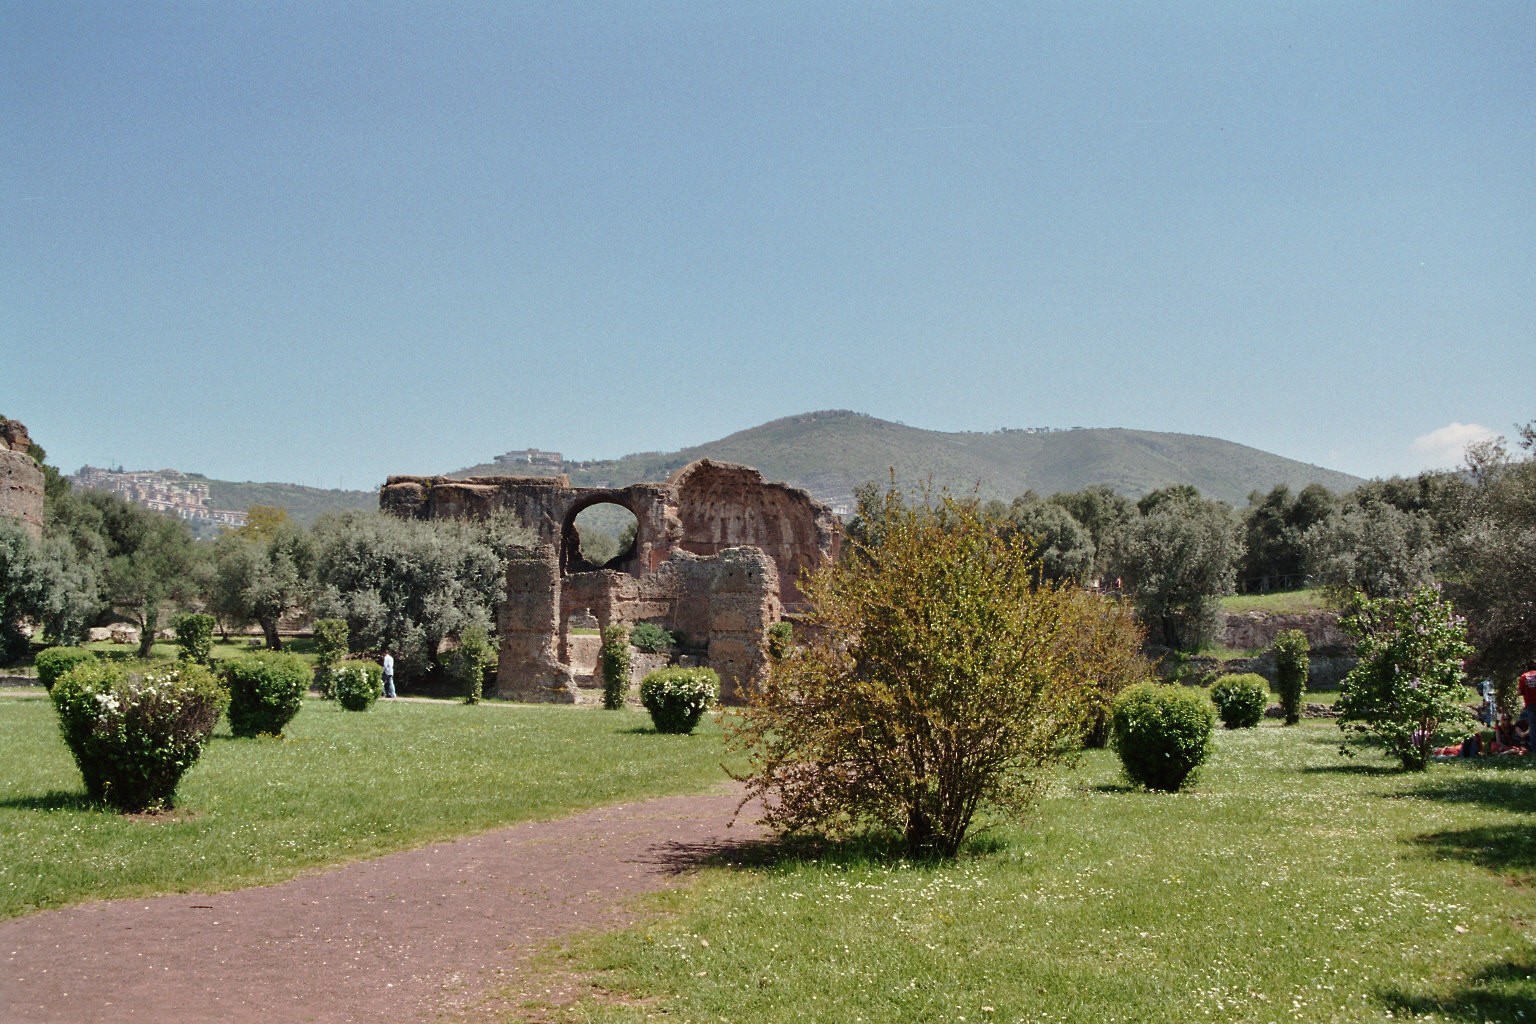  Villa d'Hadrien, Parc (wiki user FoekeNoppert, GNU licence)